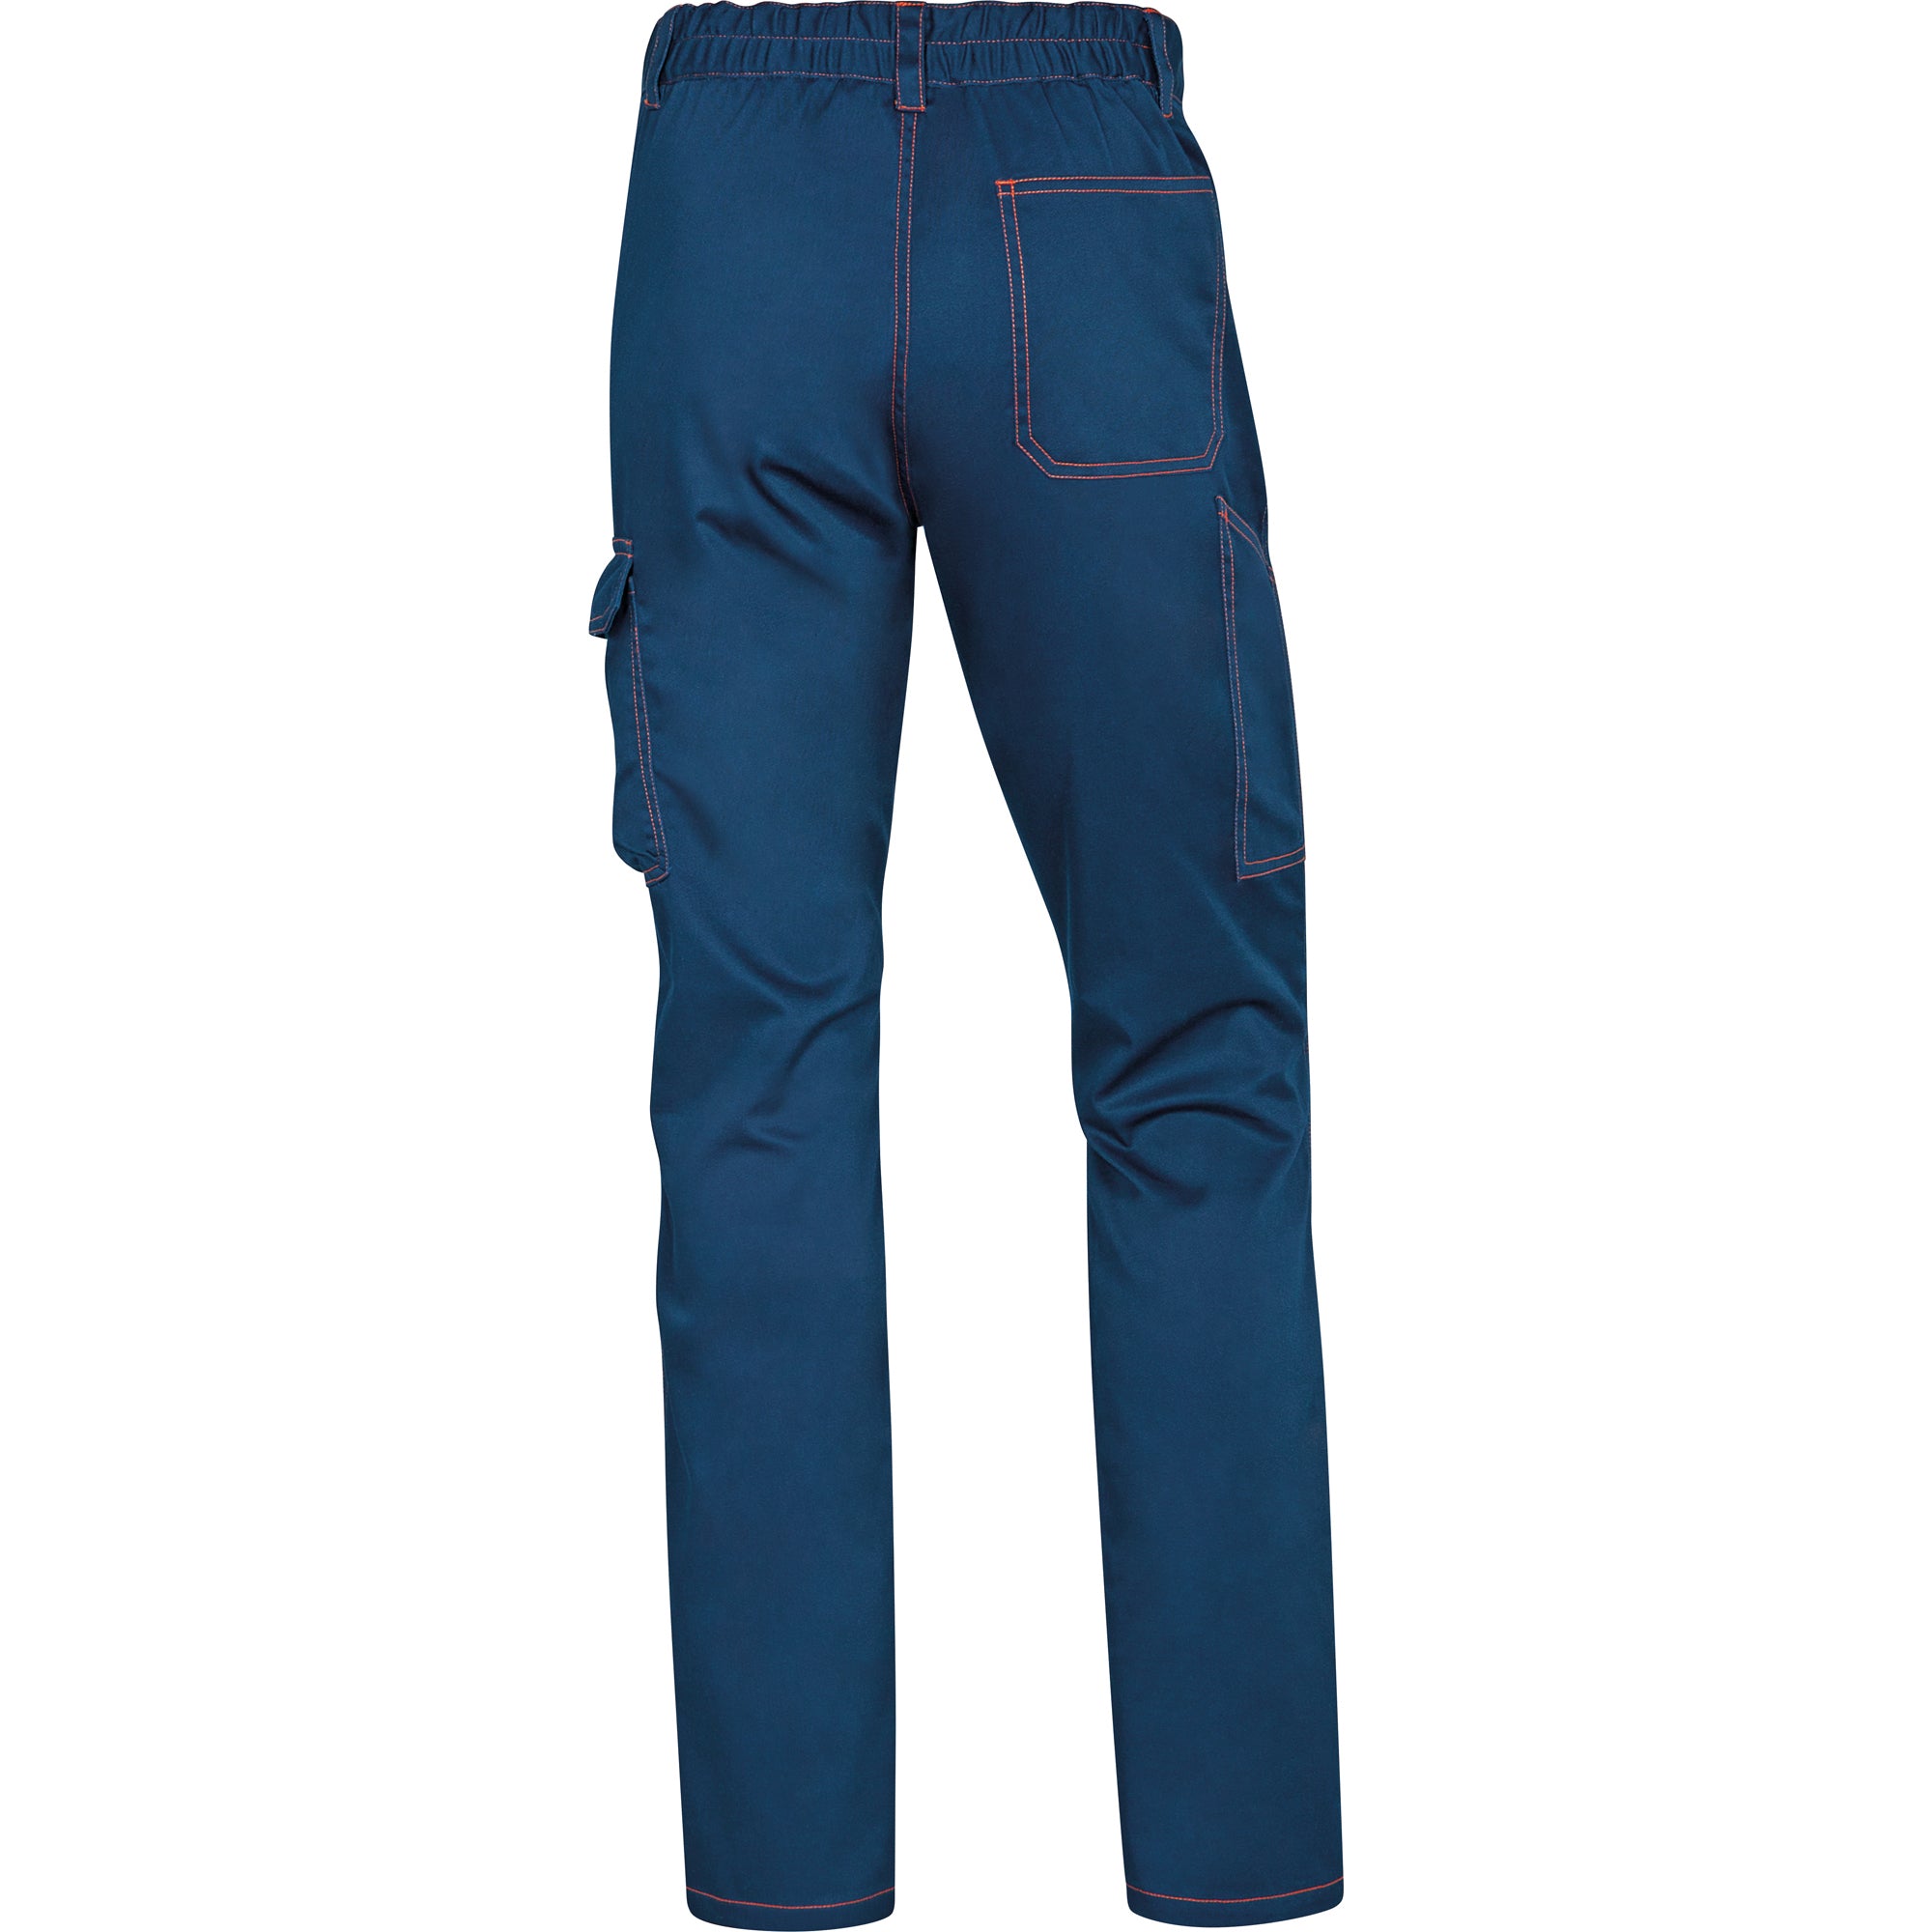 deltaplus-pantalone-lavoro-panostrpa-tg-m-blu-arancio